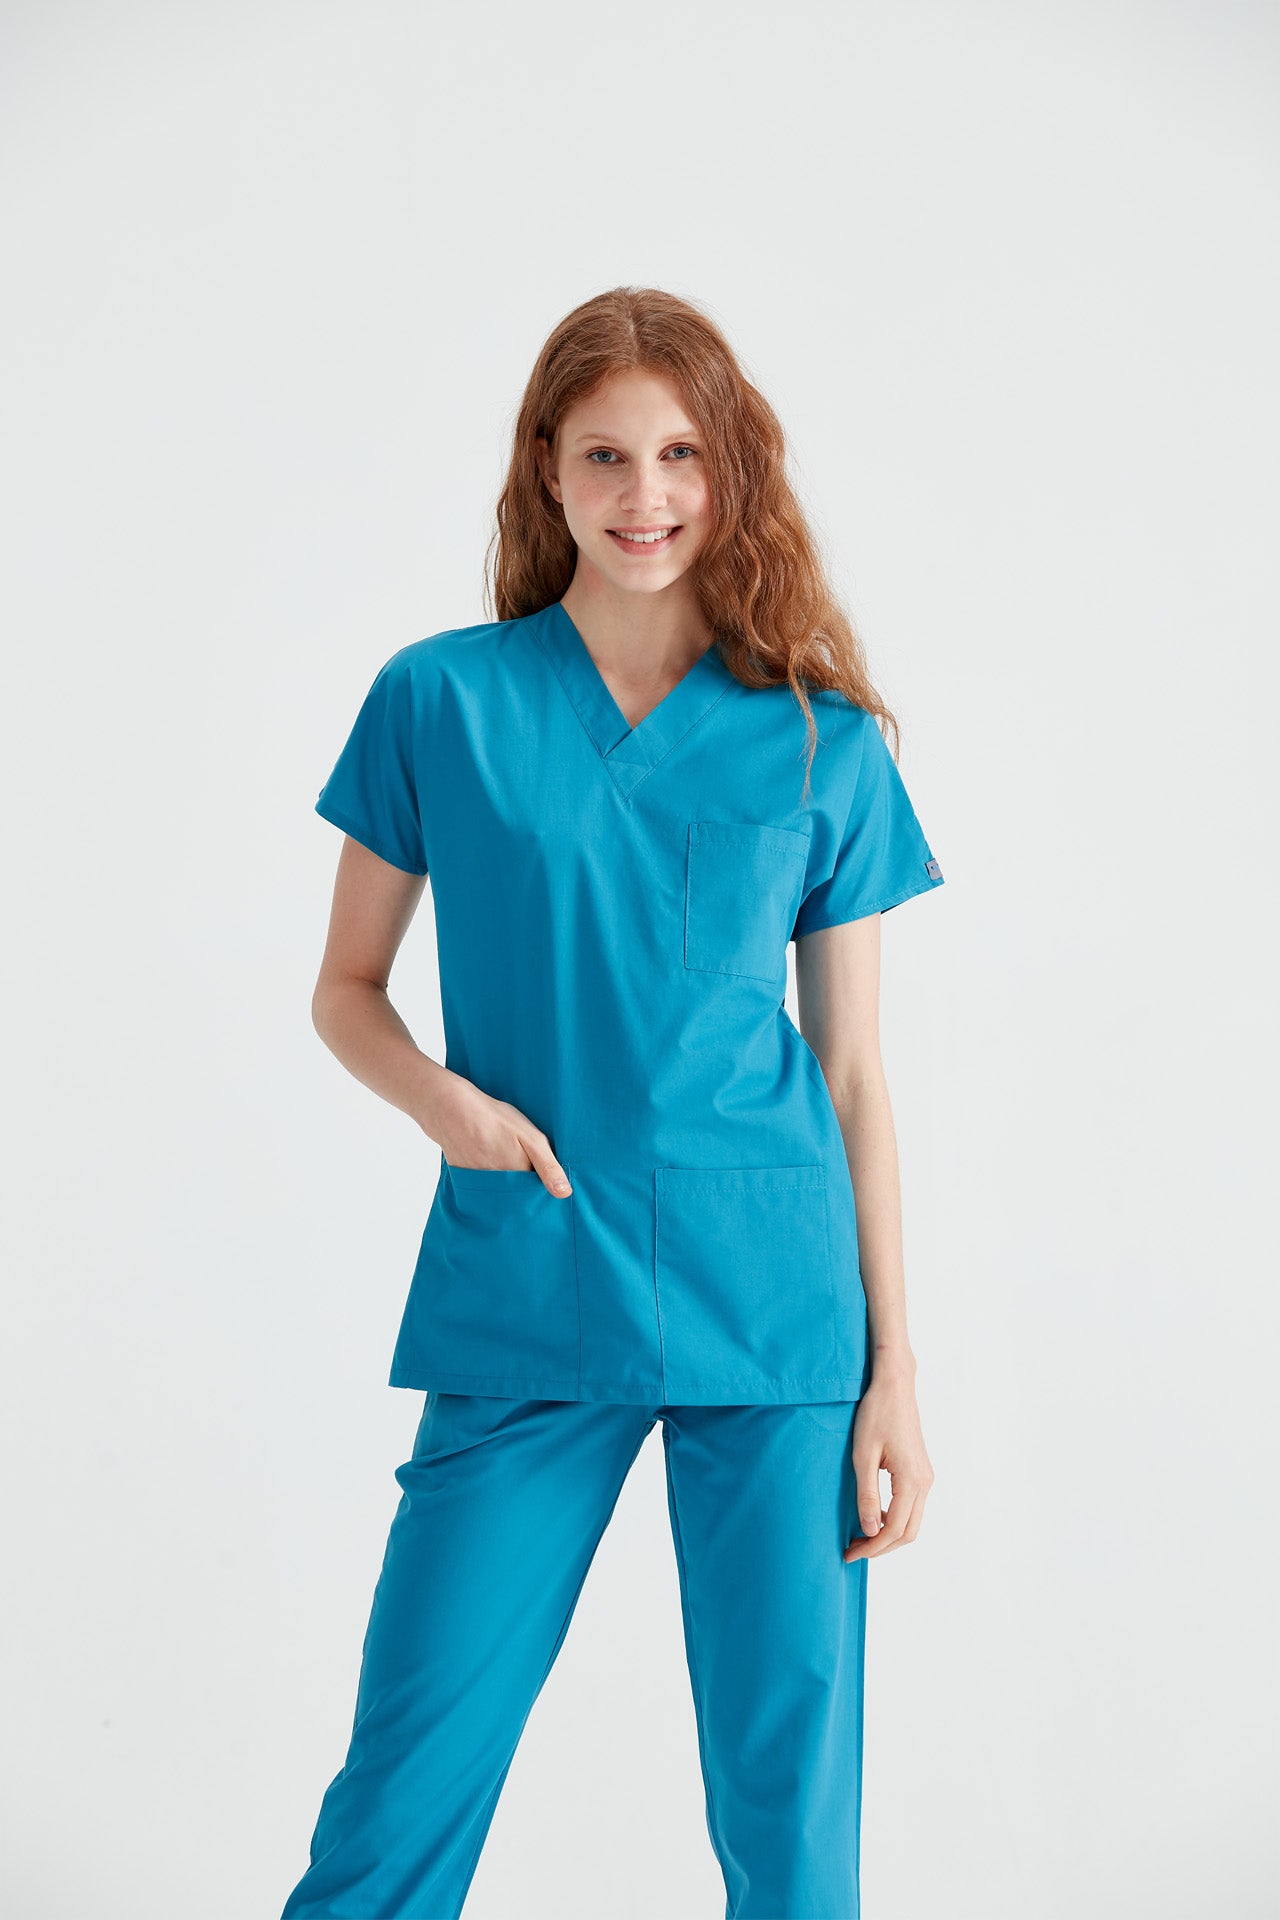 Asistenta medicala imbracata in costum medical elastan Dark Turquoise, vedere din fata